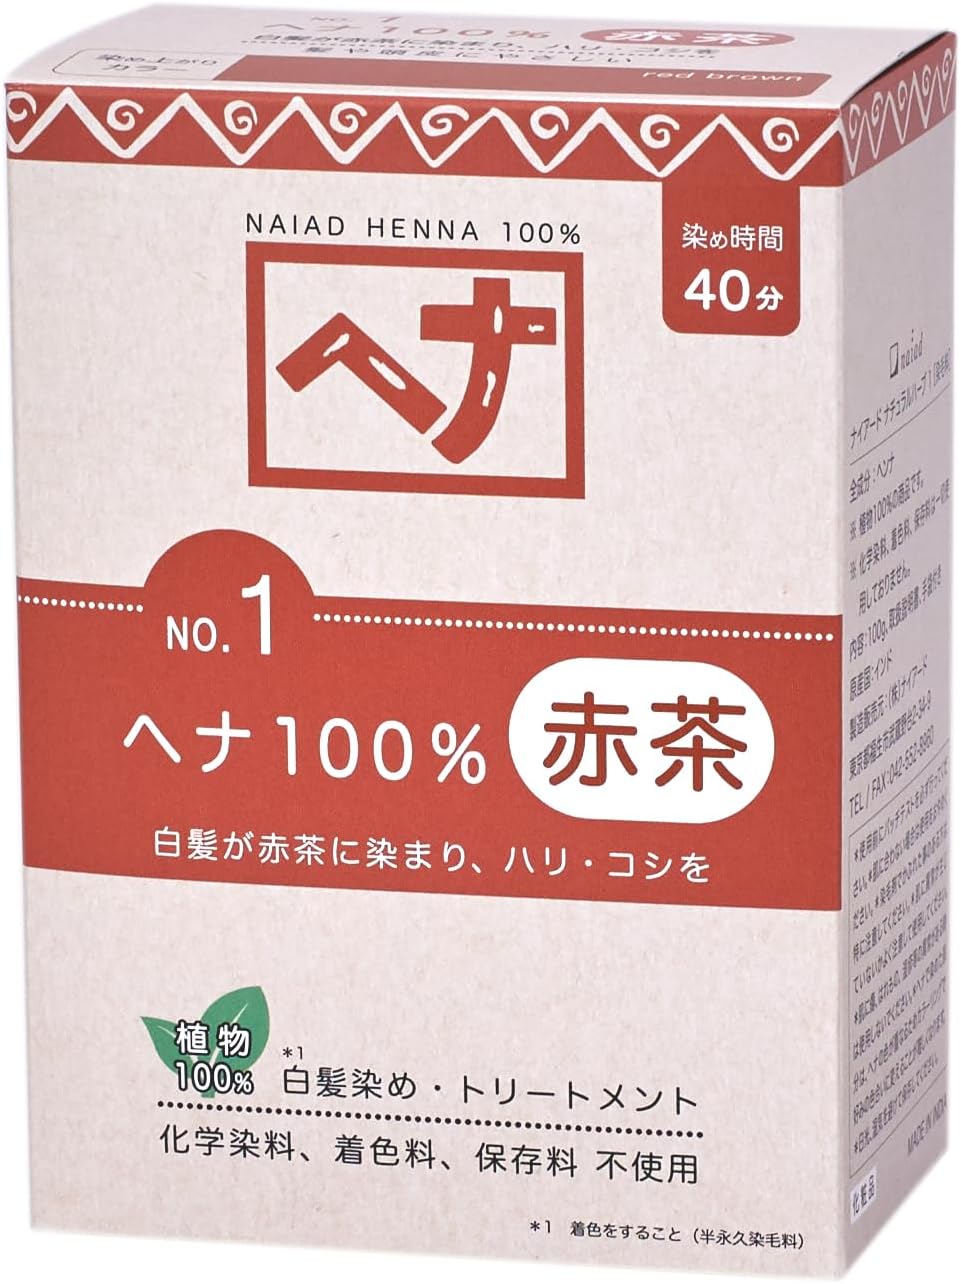 1066650-kf ヘナ100% 赤茶 100g【ナイアード】